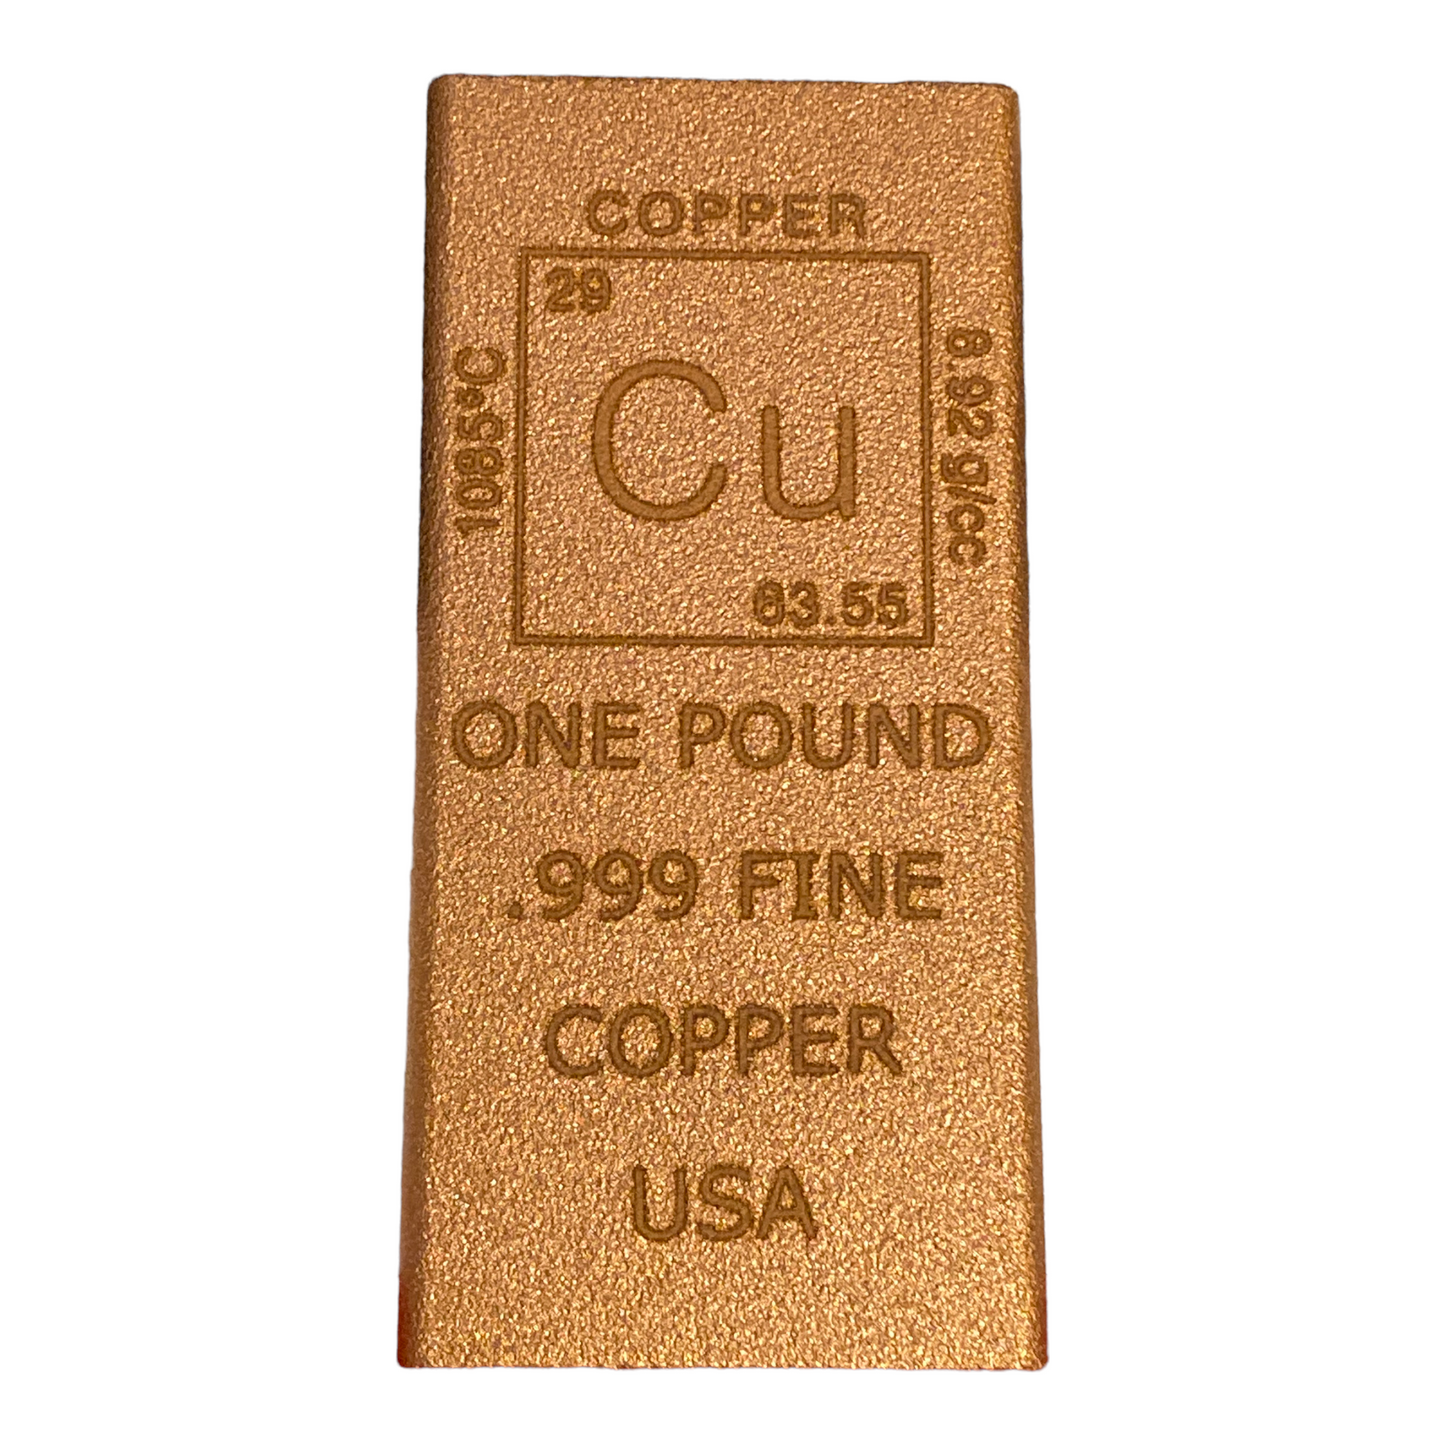 Cu Element 1 pound copper bullion bar by Liberty Copper